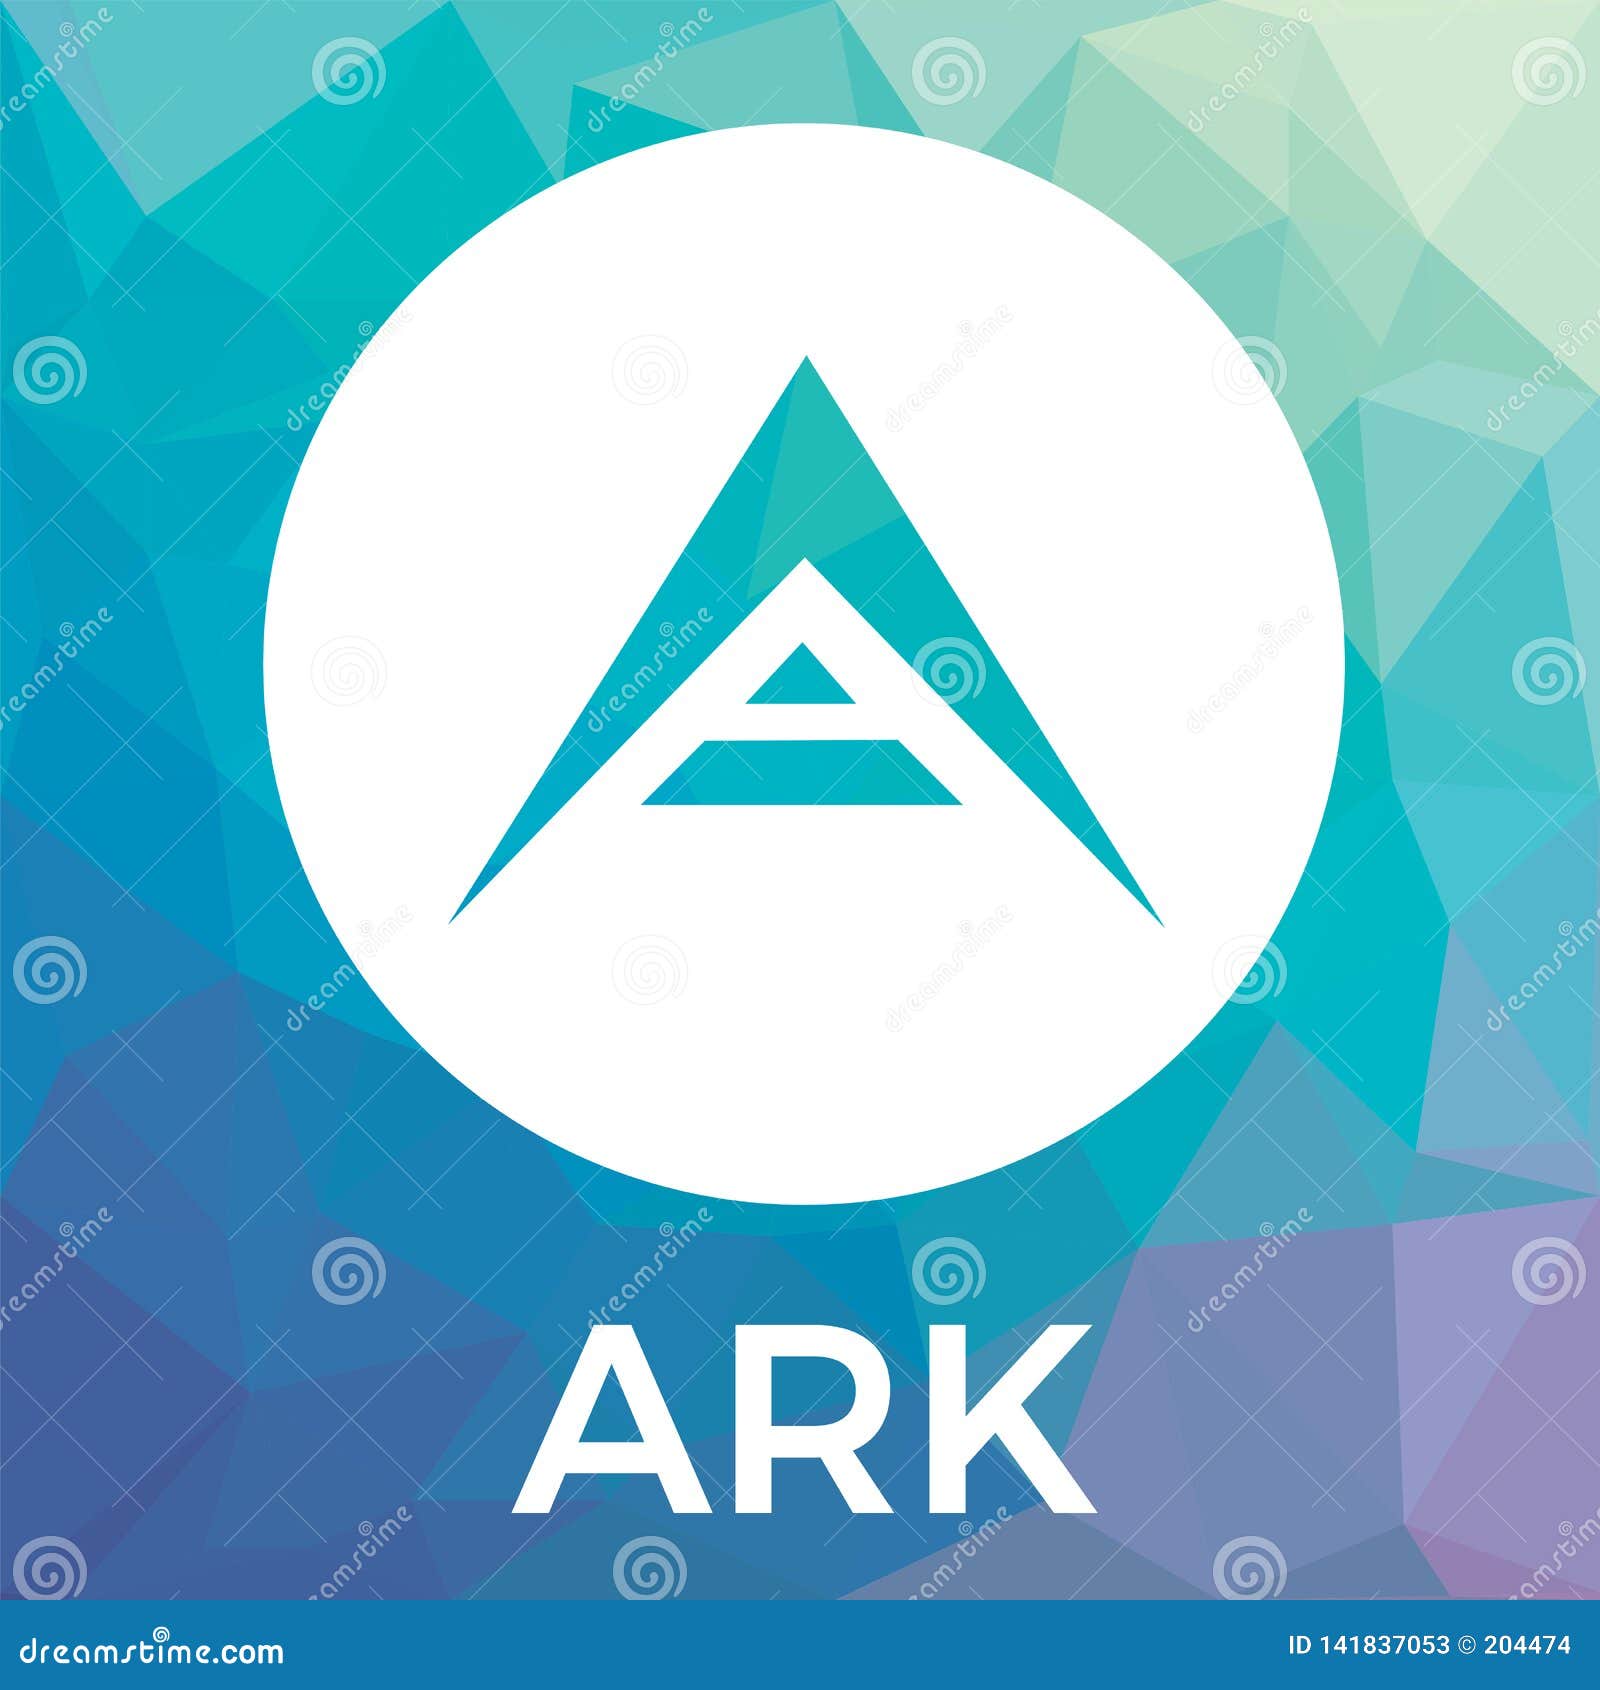 Ark Cryptocurrency Coin Logo - Blockchain Vector Stock Vector - Illustration of mining, vector ...